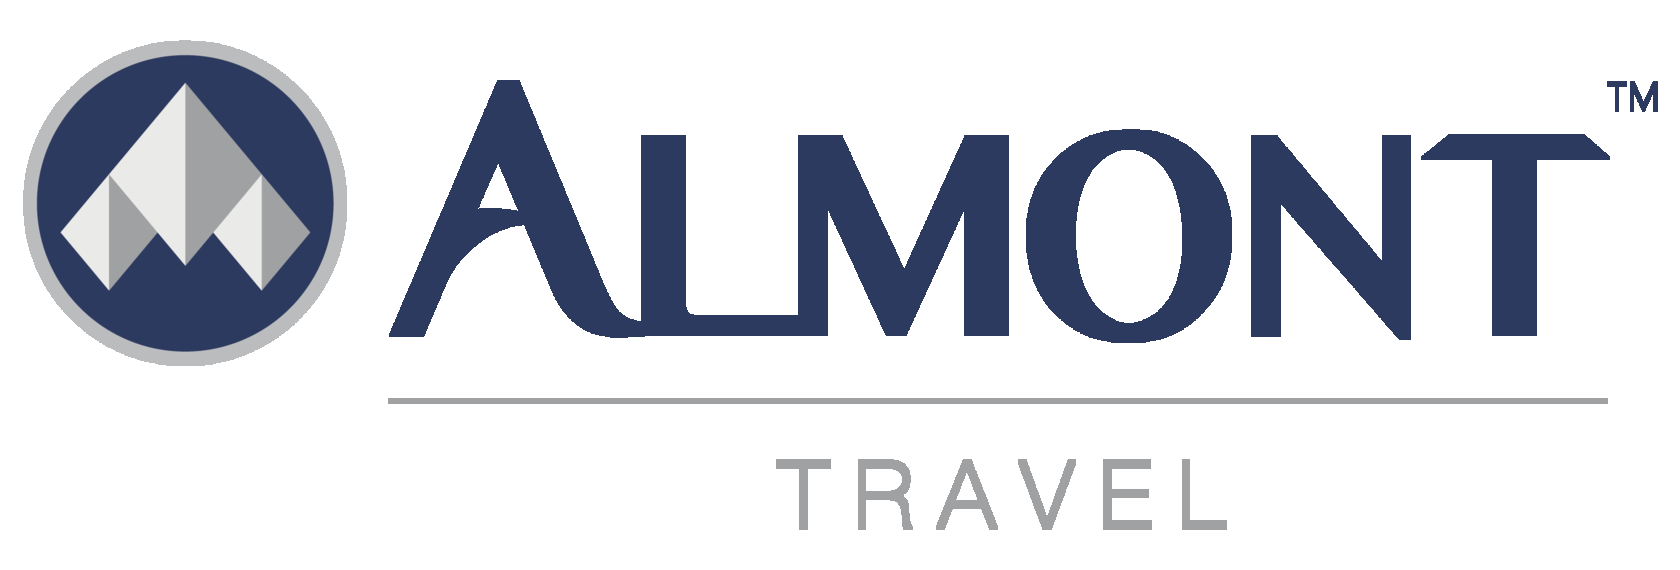 Almont Travel